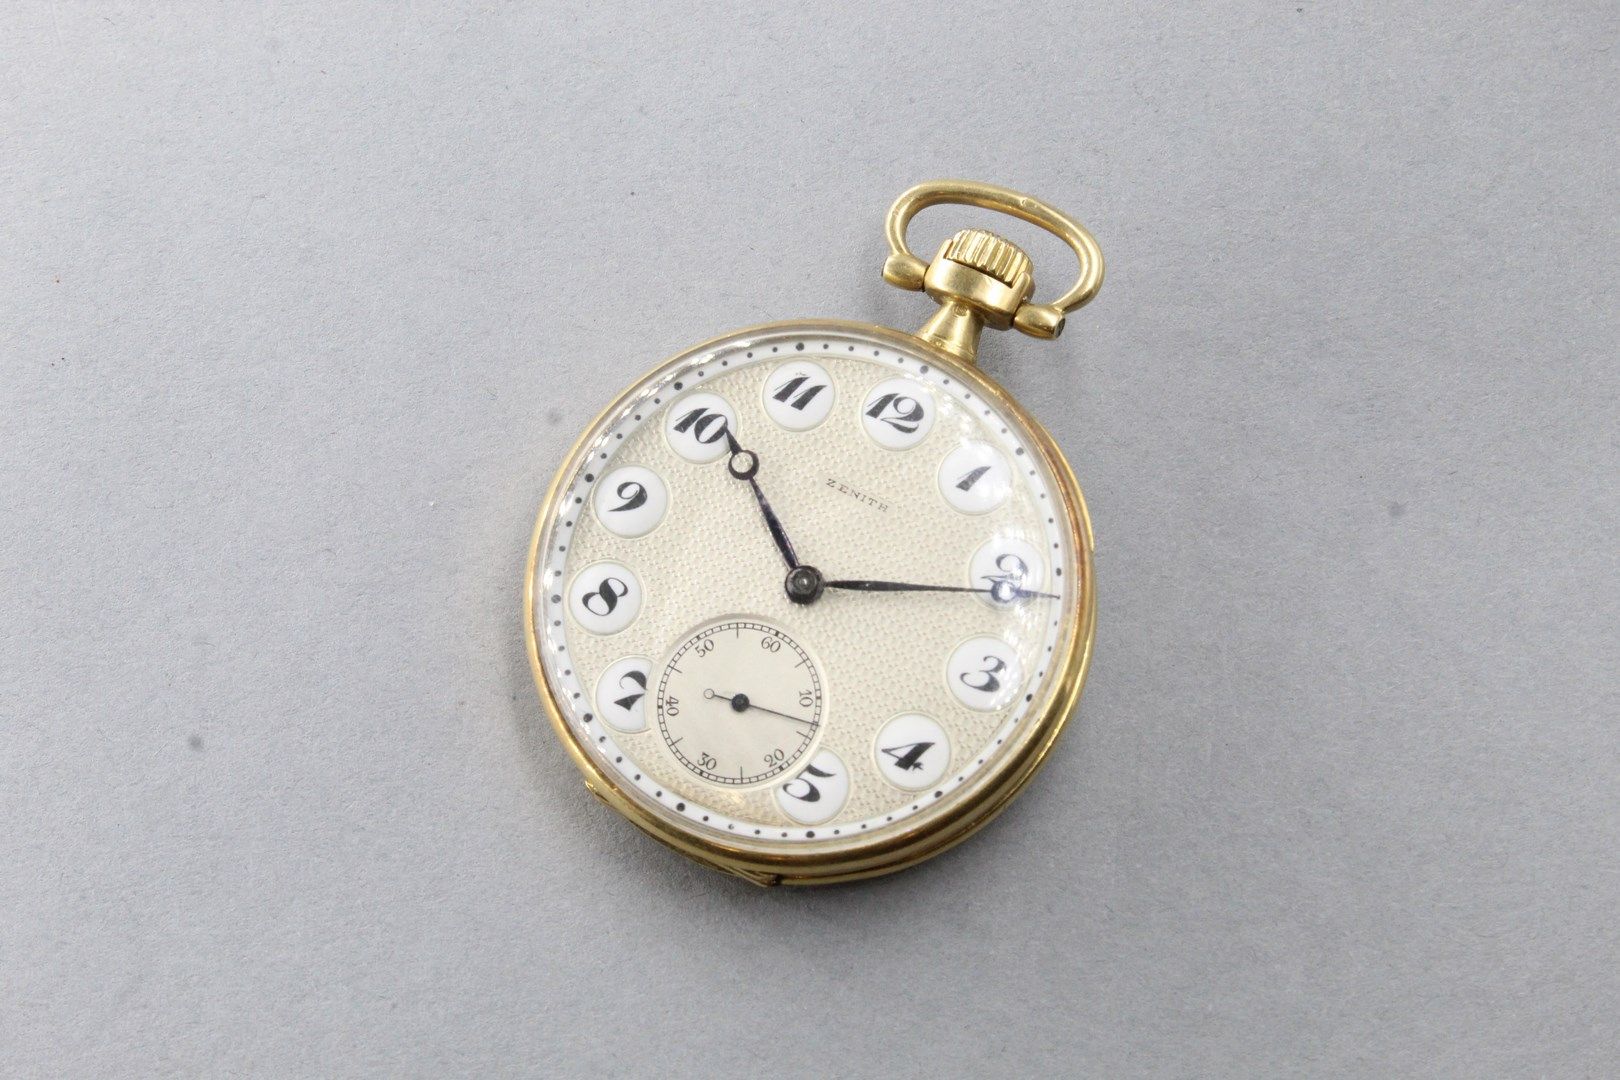 Null 泽尼特

18K(750)黄金怀表，表盘上有奶油色扭索纹背景。

阿拉伯数字表示小时，秒针位于6点钟方向。

猫头鹰的标志。

直径：45毫米。- 毛&hellip;